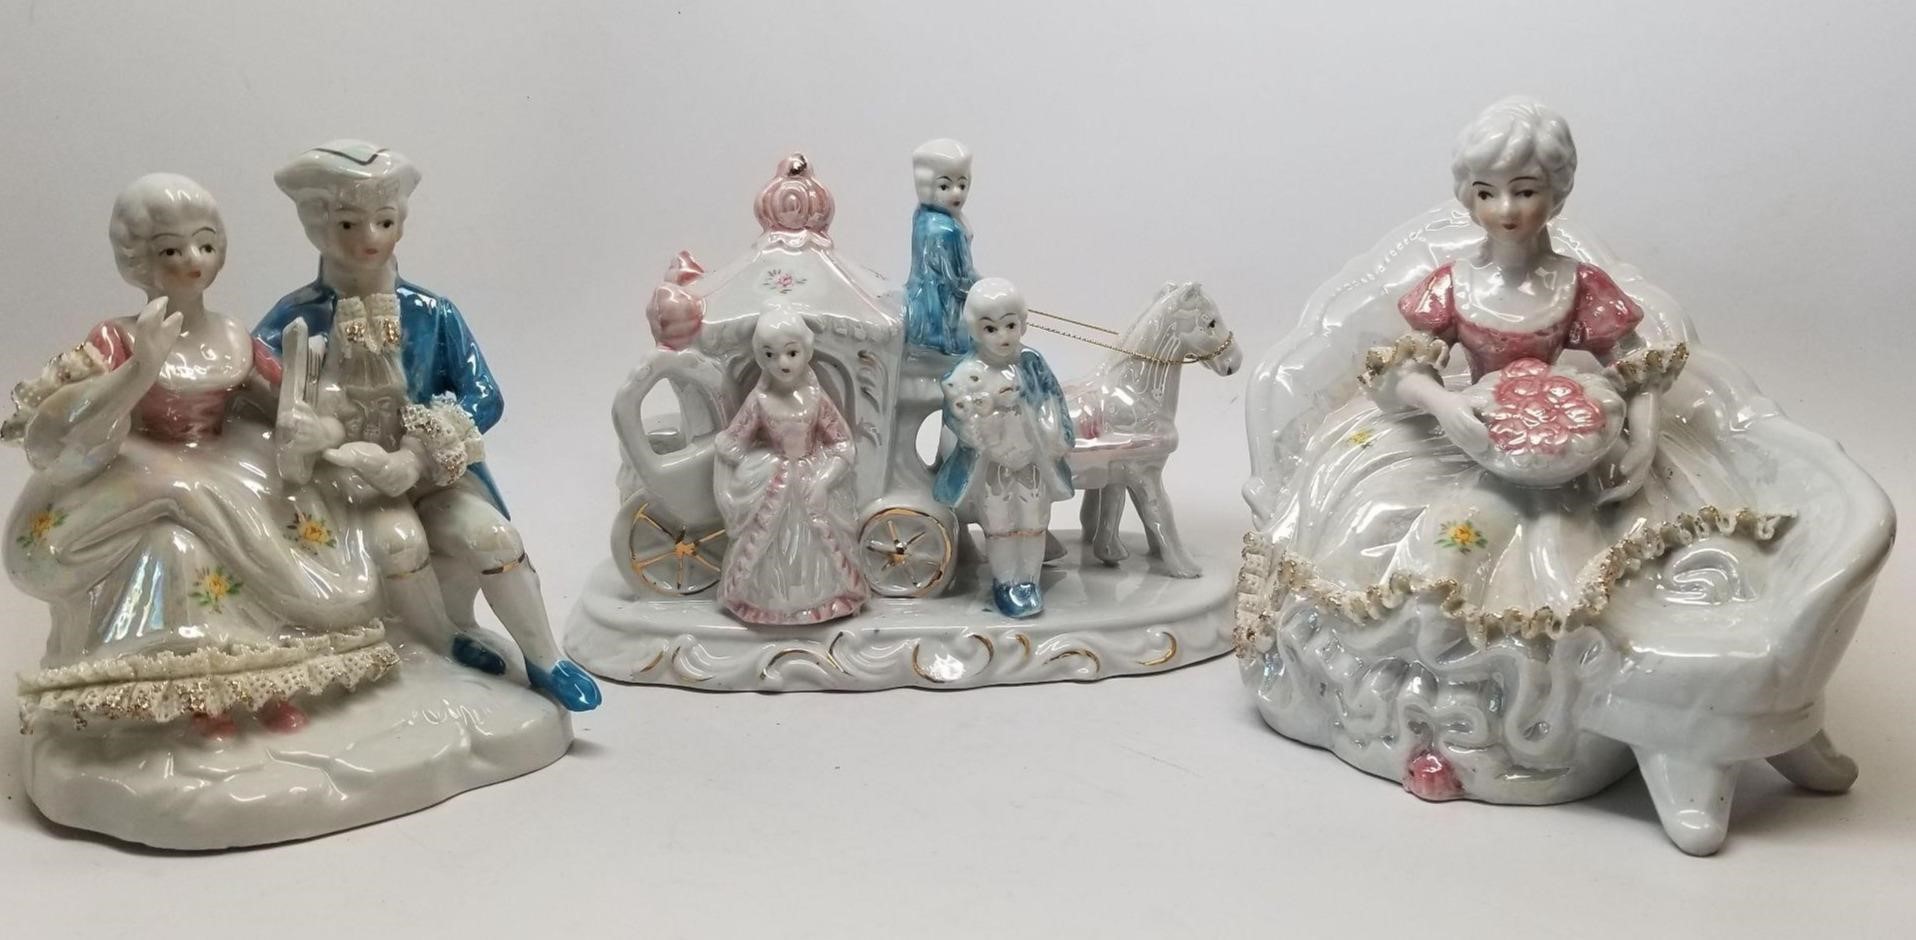 Three Porcelain Figurines